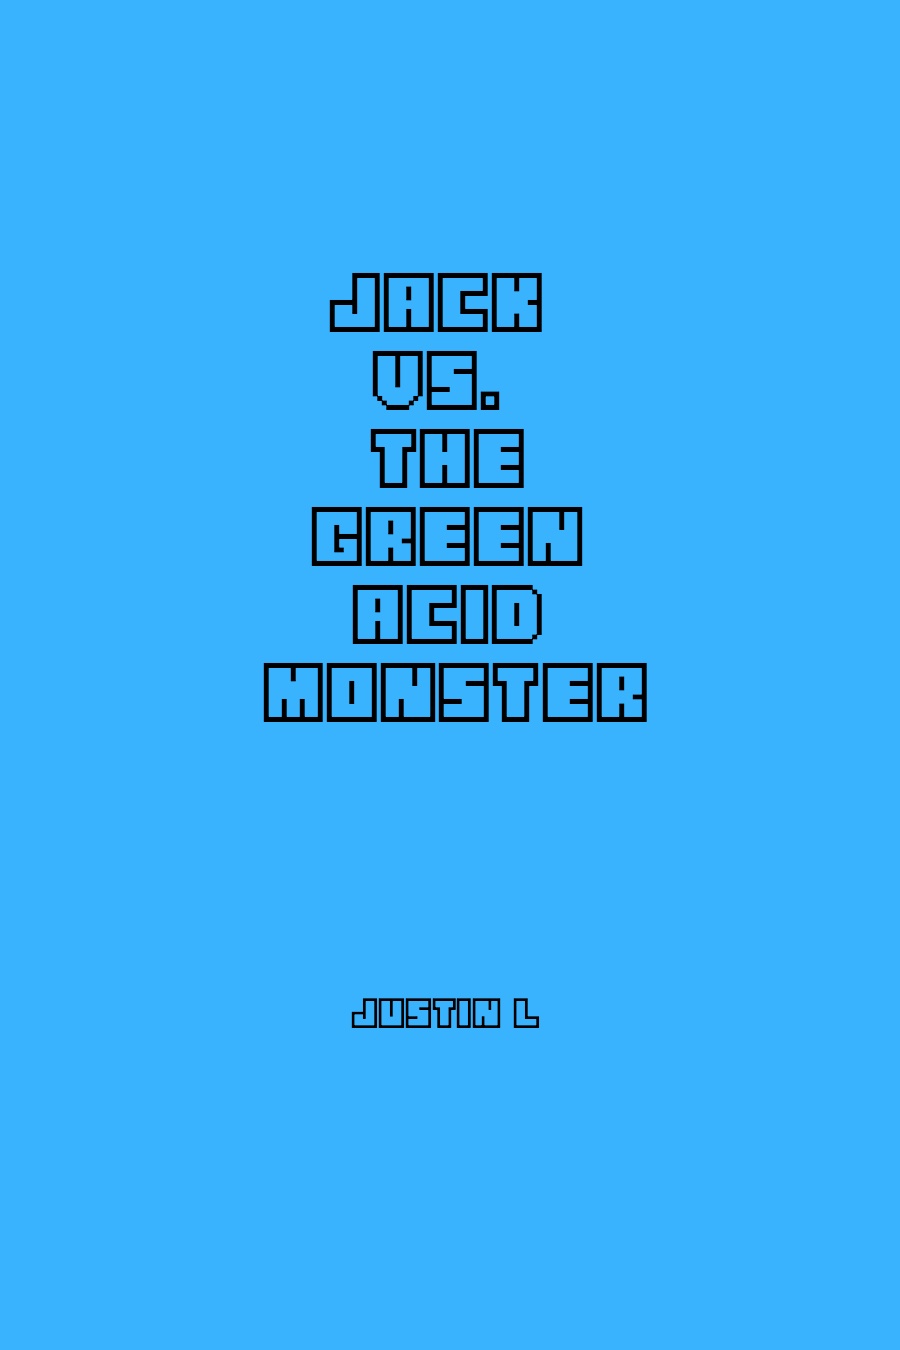 Jack Vs the Green Acid Monster by Justin L